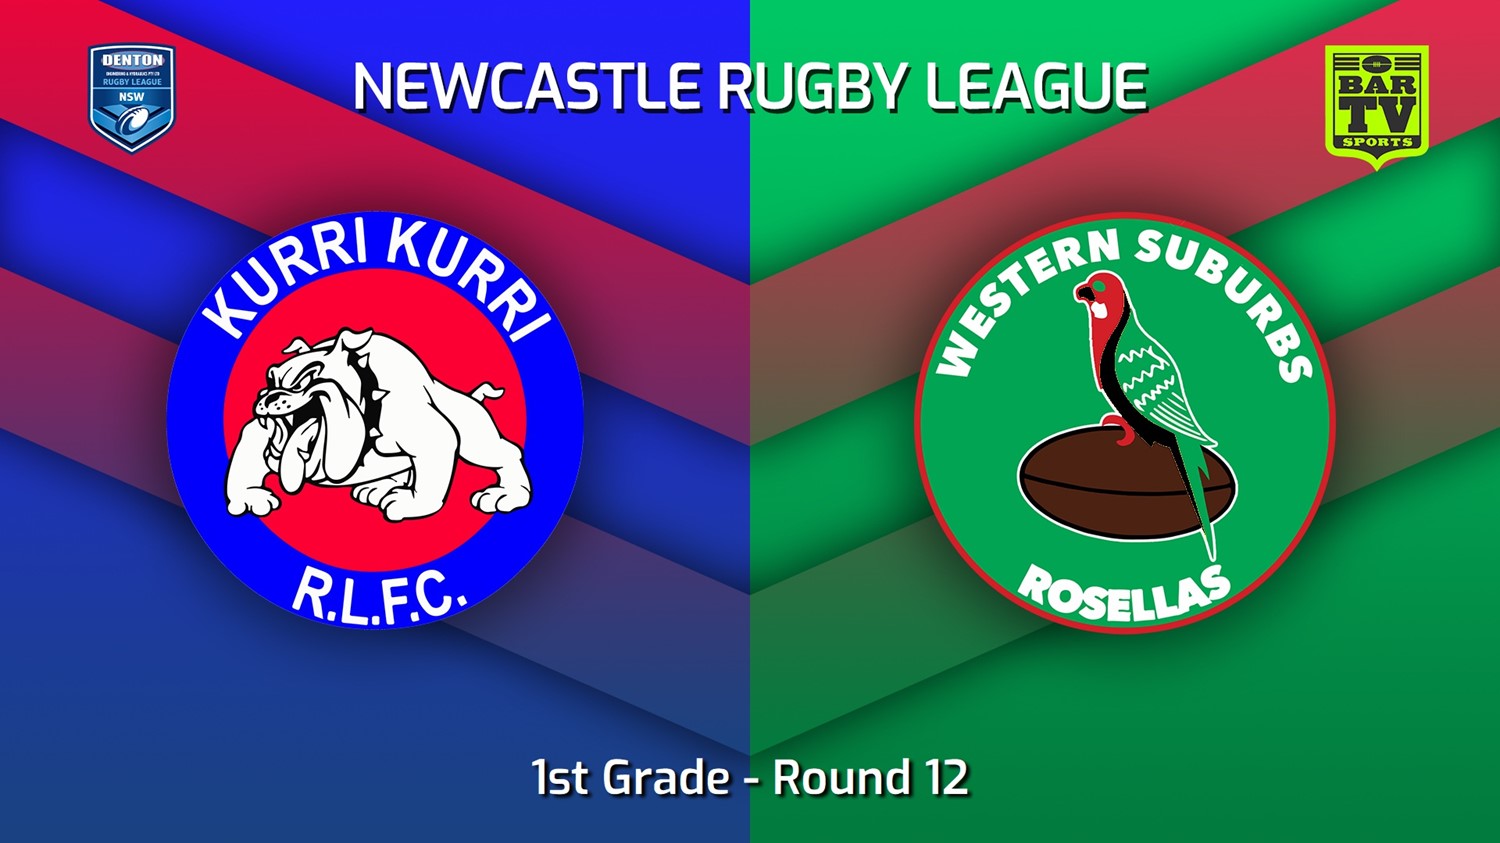 220618-Newcastle Round 12 - 1st Grade - Kurri Kurri Bulldogs v Western Suburbs Rosellas Slate Image